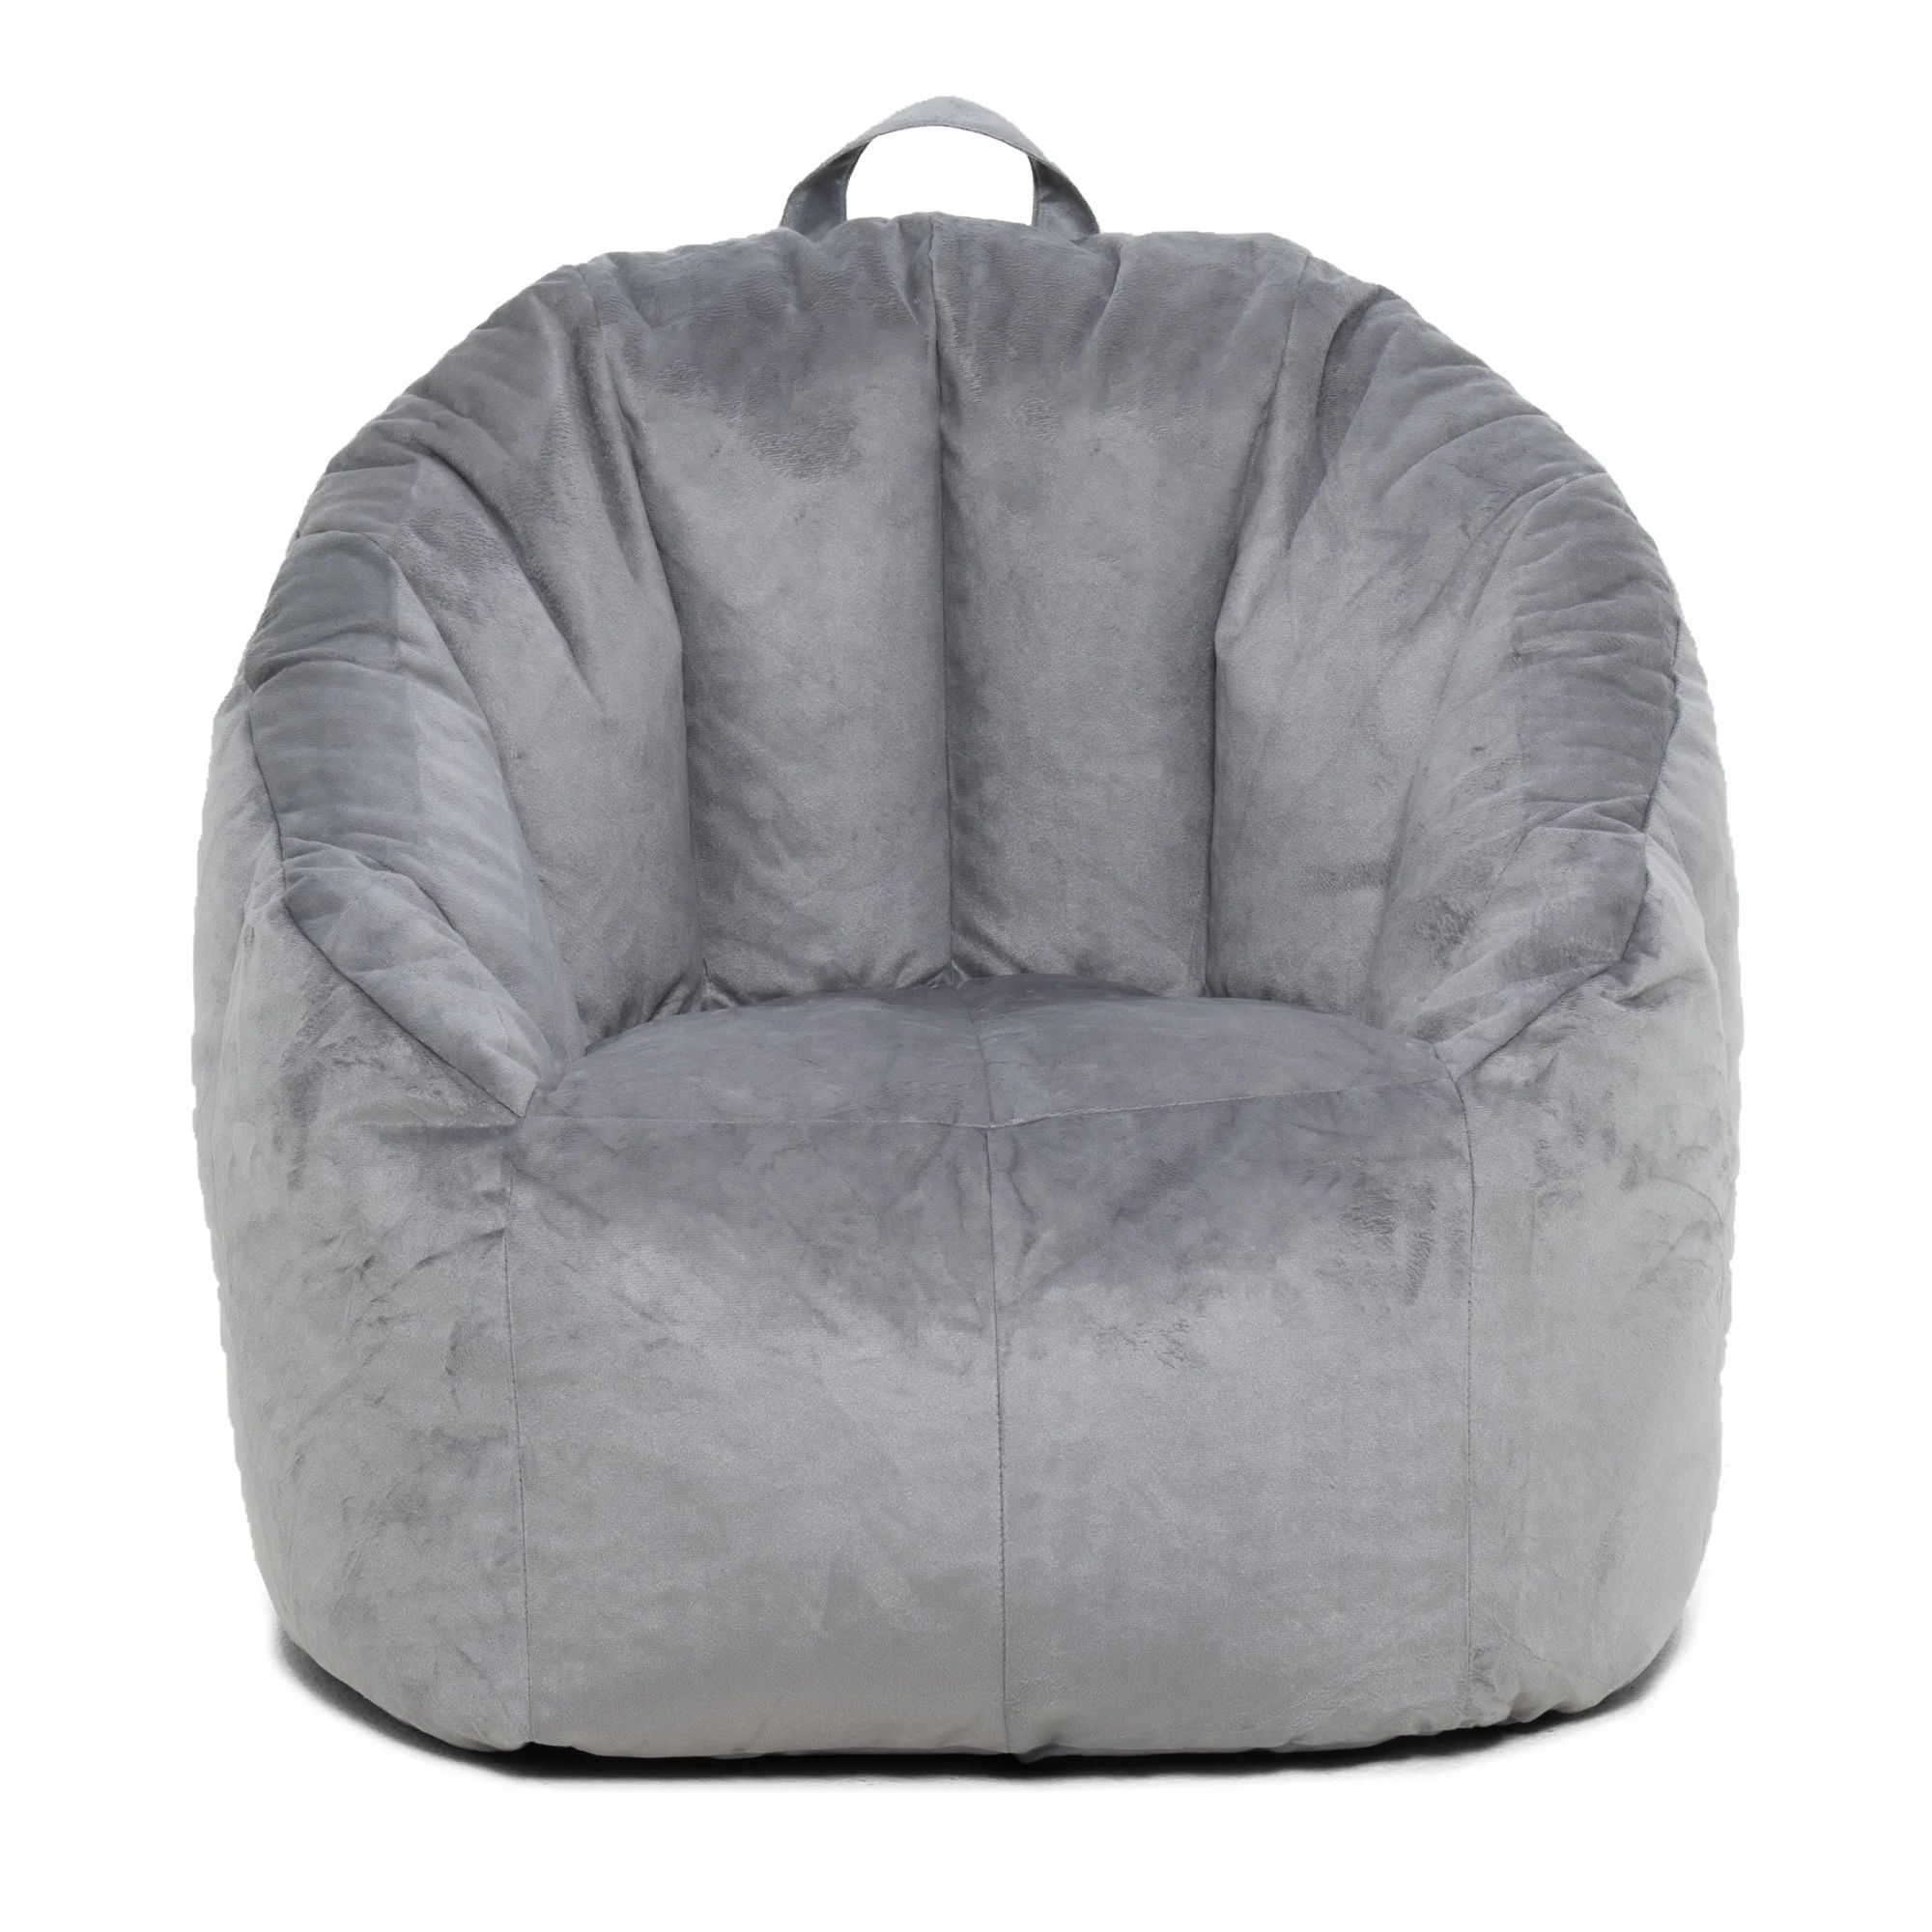 Big Joe Joey Bean Bag Chair, Plush, Kids/Teens, 2.5ft, Gray | Walmart (US)